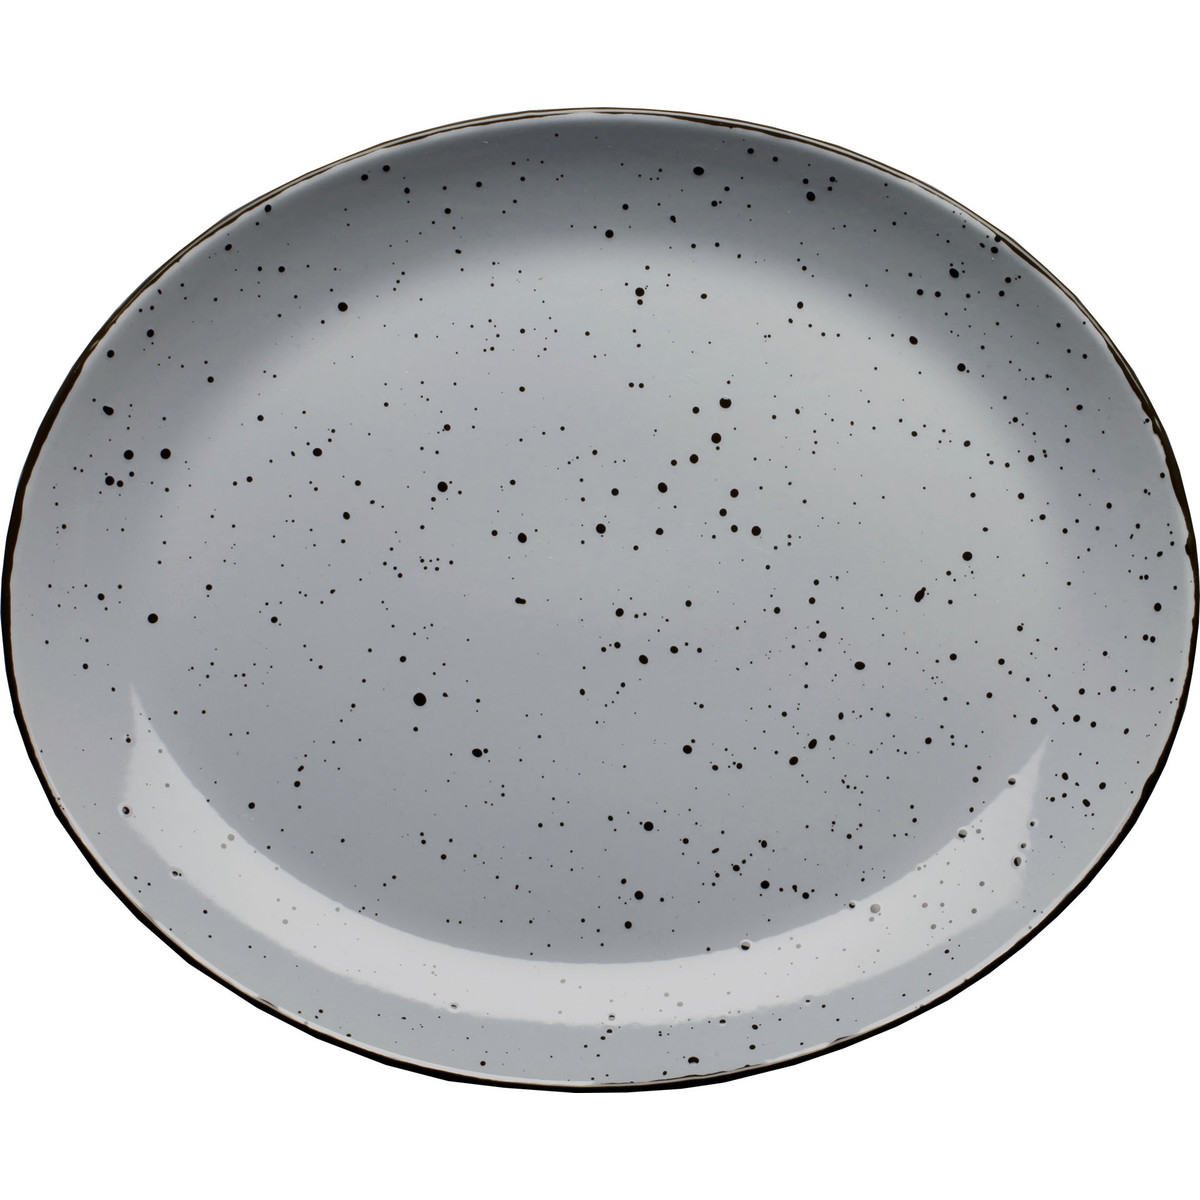 Porzellanserie "Granja" grau Platte flach oval, 30,5 x 25,5 cm